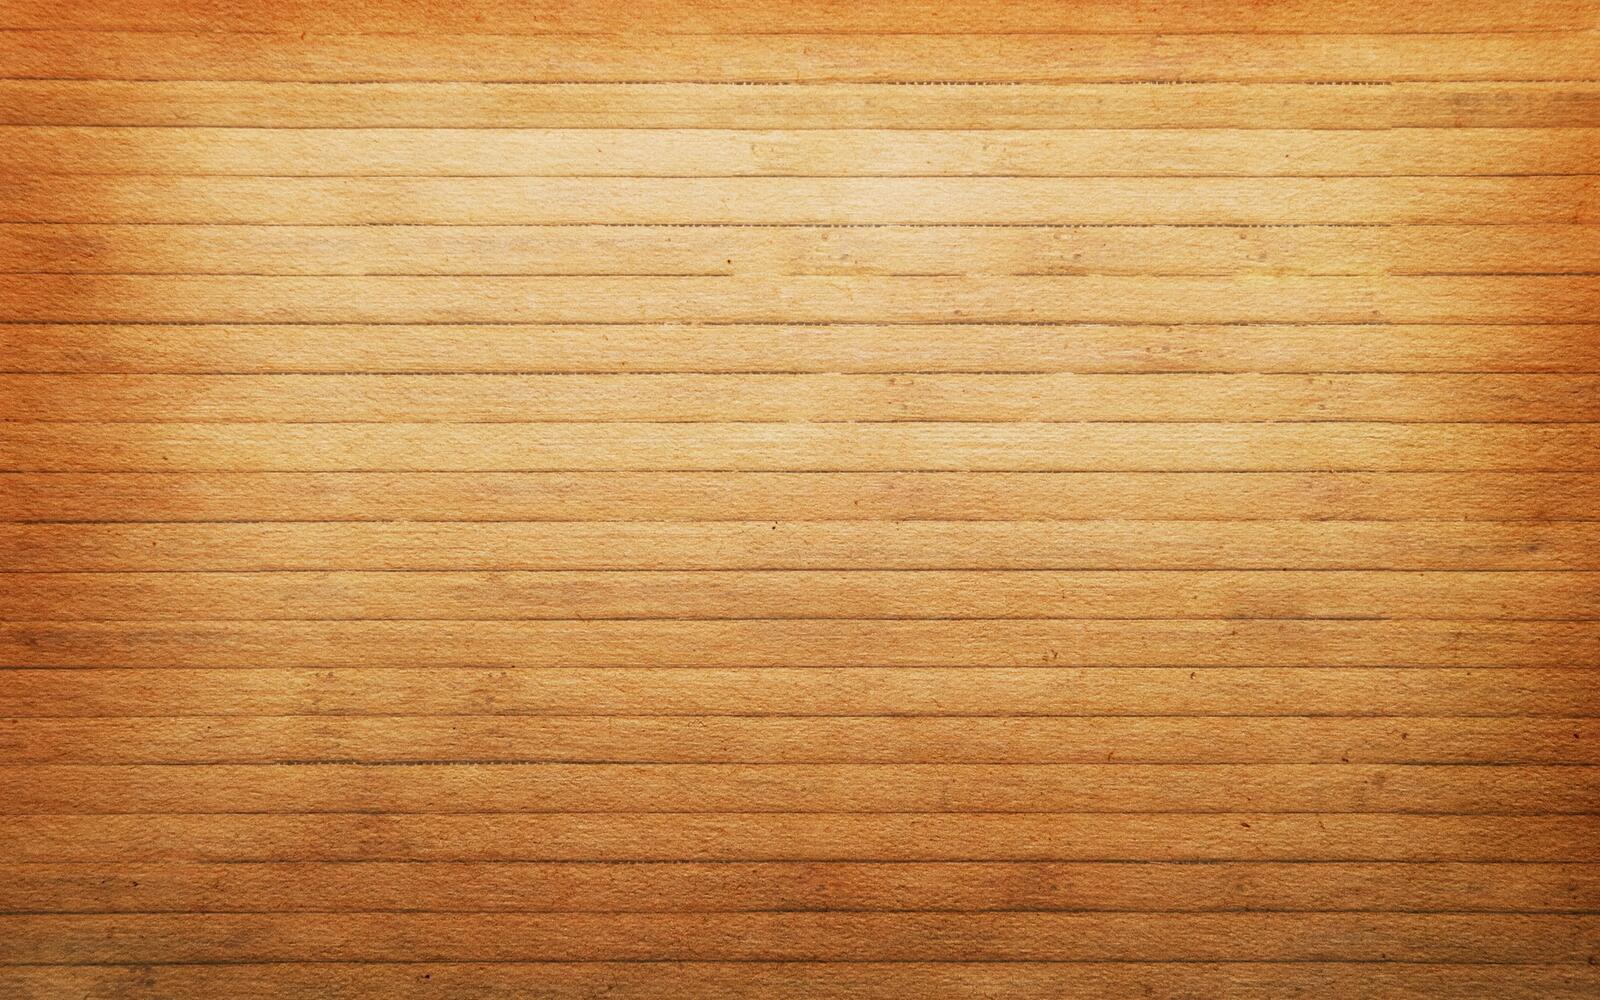 Wallpapers wooden boards horizontal on the desktop